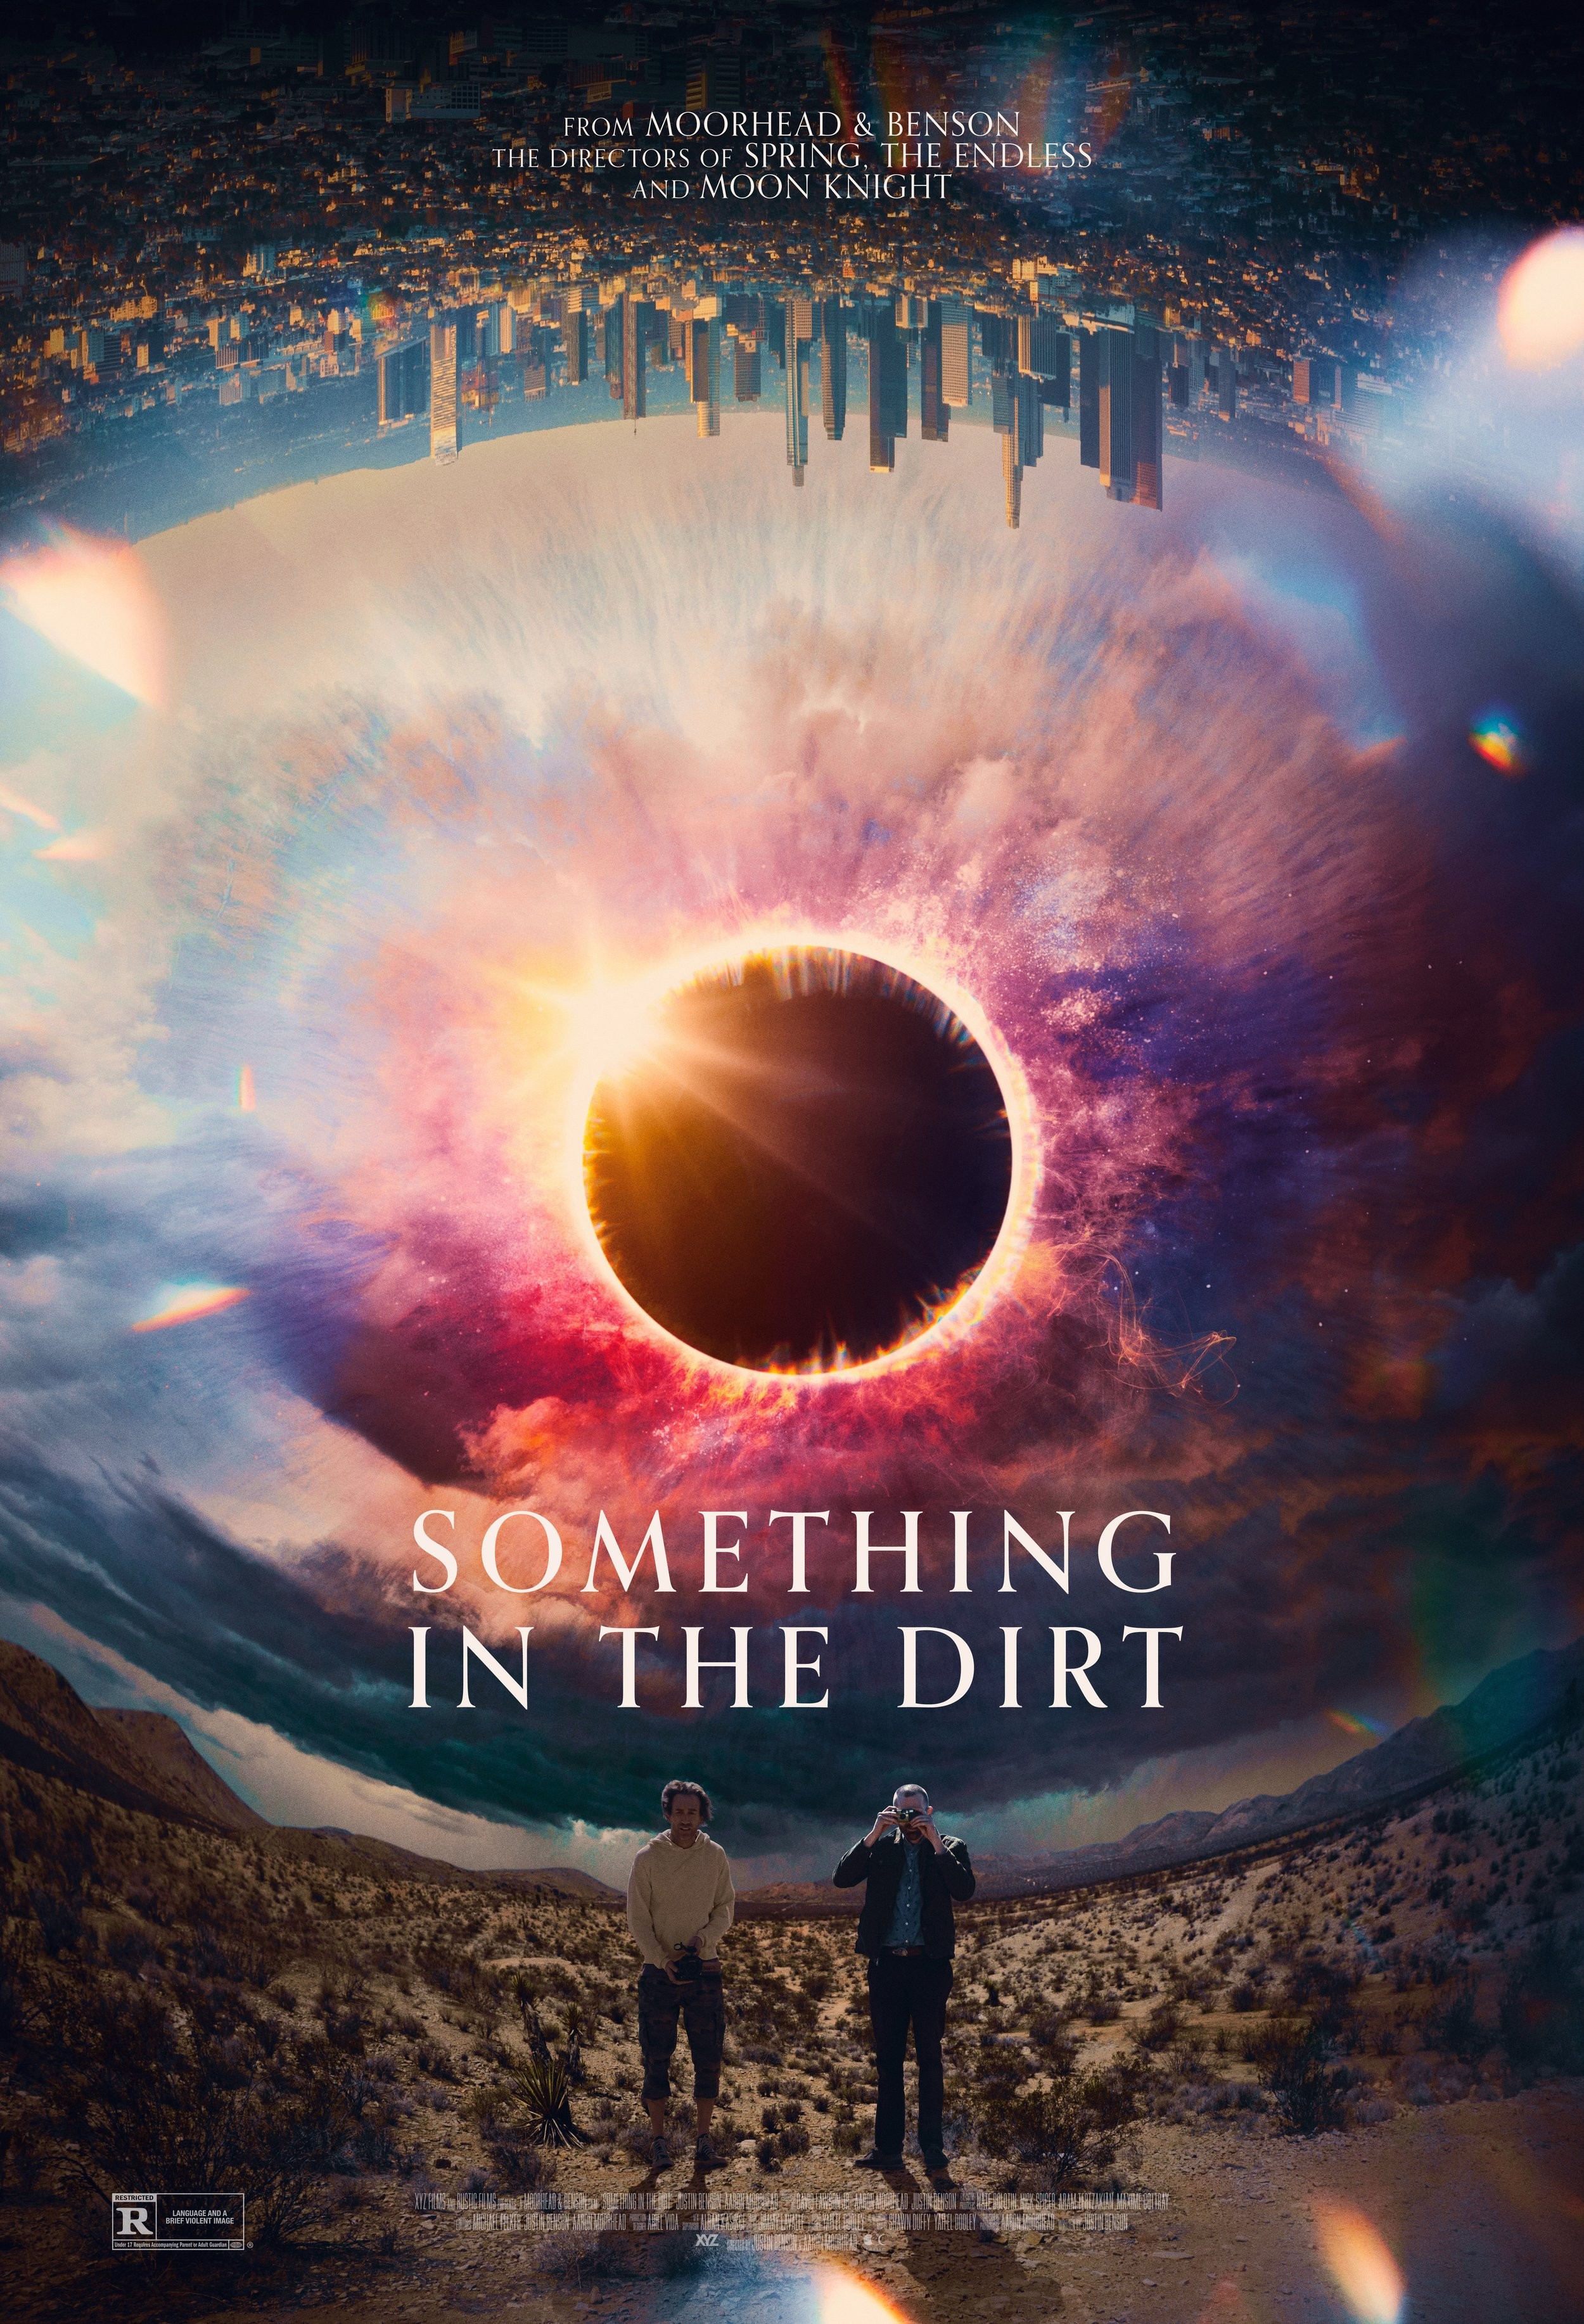 Dirt! The Movie Trailer 